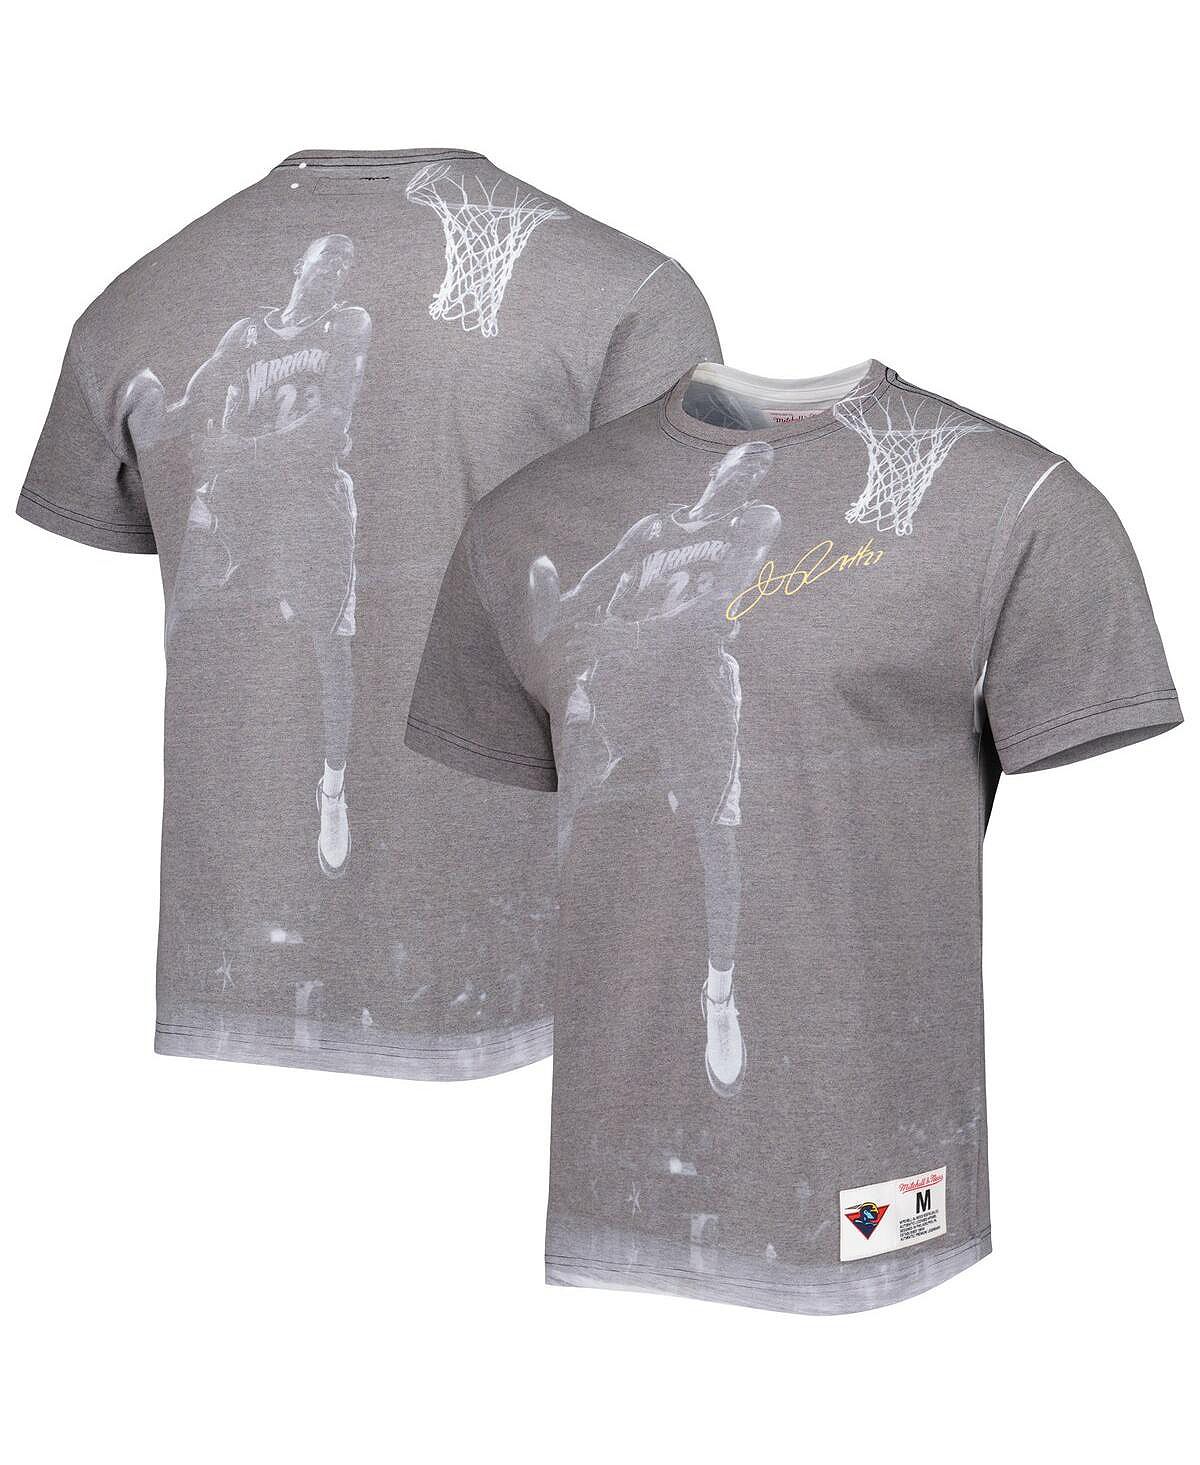 Мужская футболка jason richardson grey golden state warriors above the rim с сублимацией Mitchell & Ness, серый горох голден свит